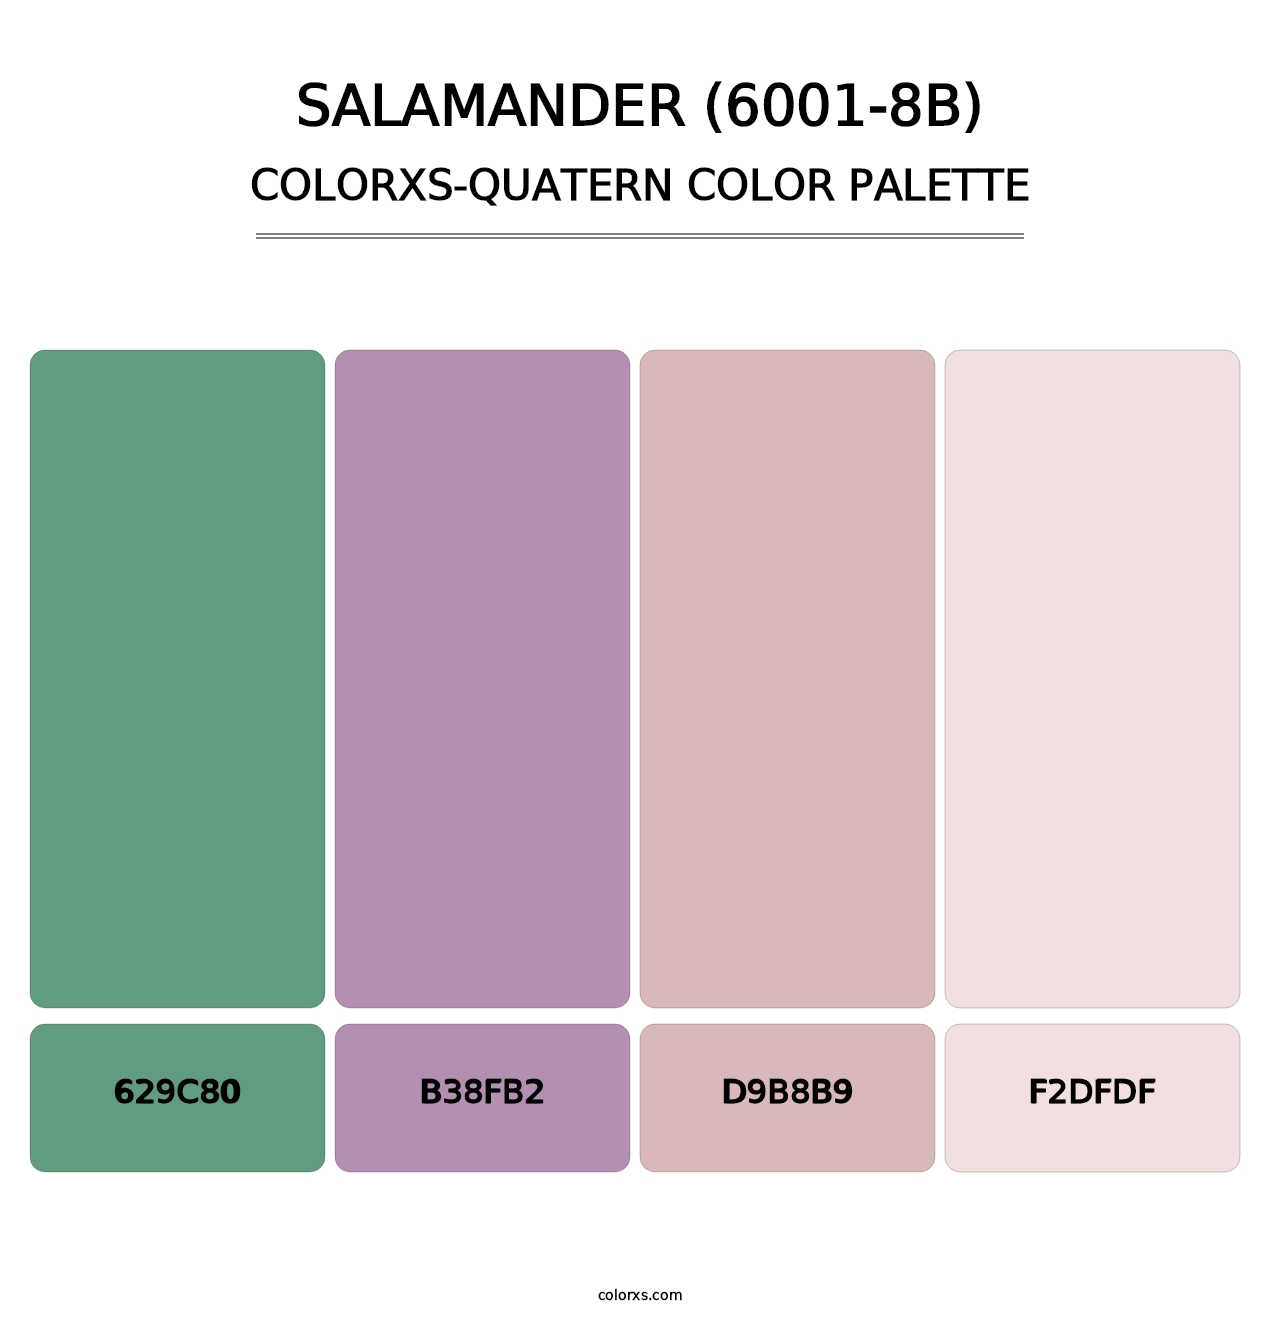 Salamander (6001-8B) - Colorxs Quatern Palette